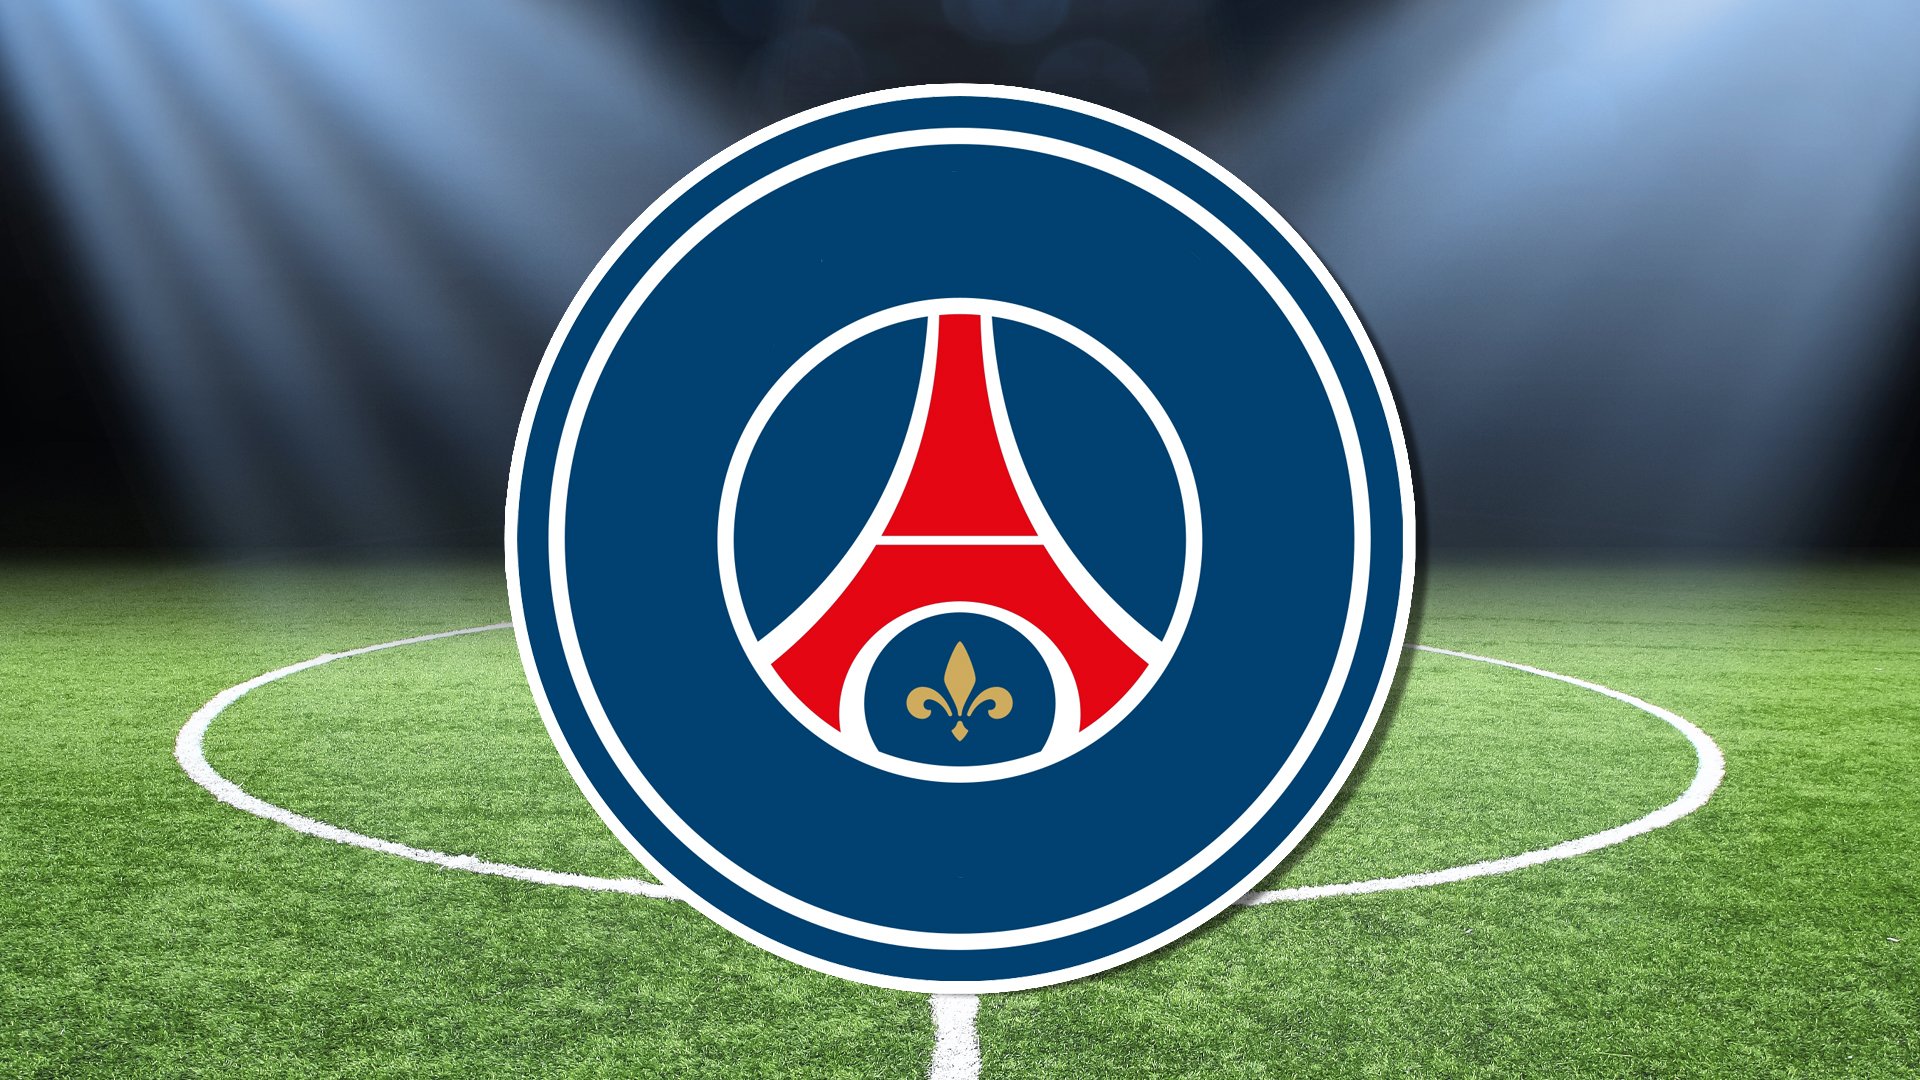 Football logo 12